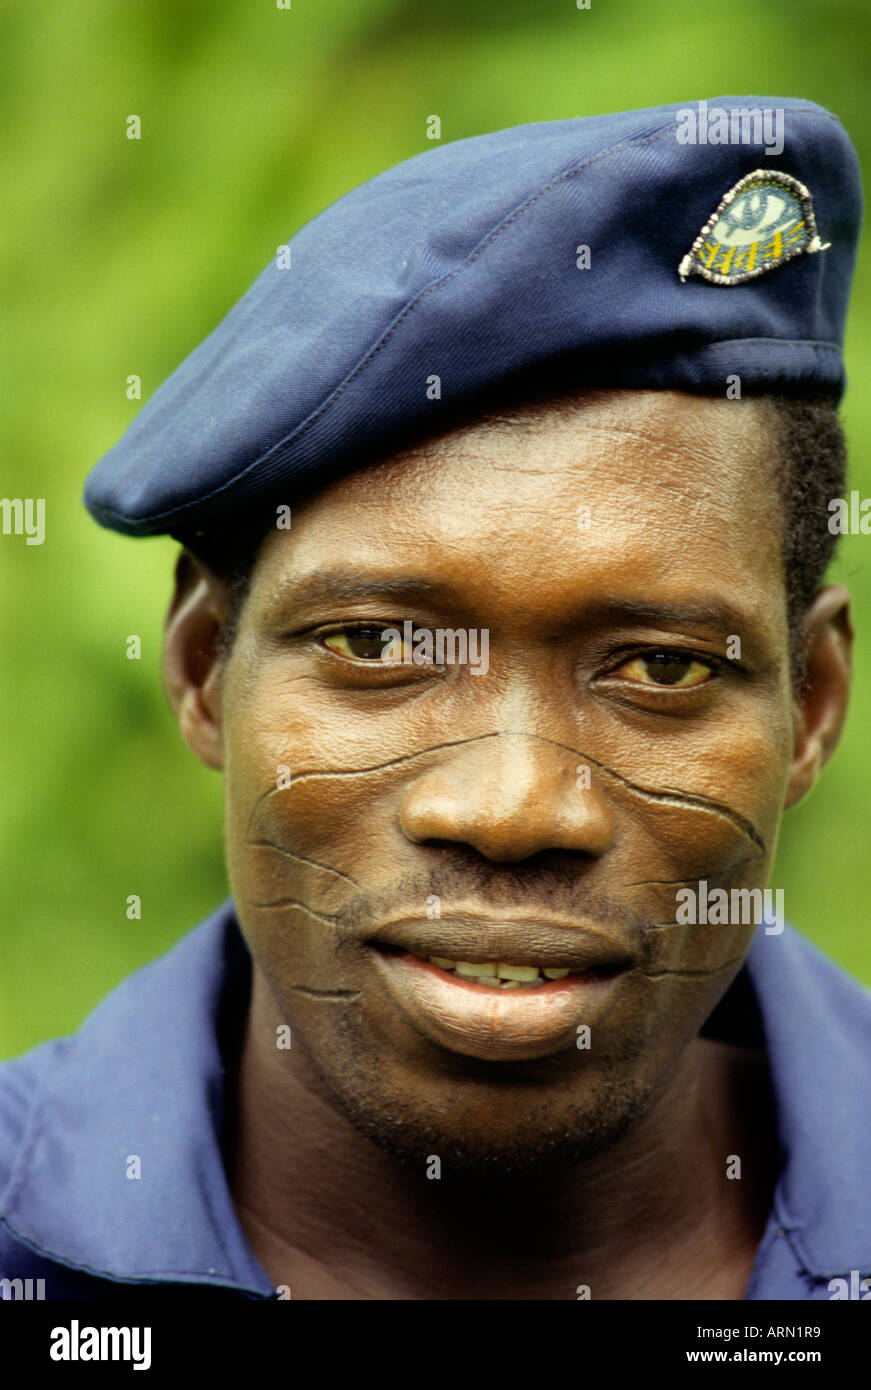 Burkina Faso, Africa. Burkinabe Man with Facial Scarification Stock Photo -  Alamy